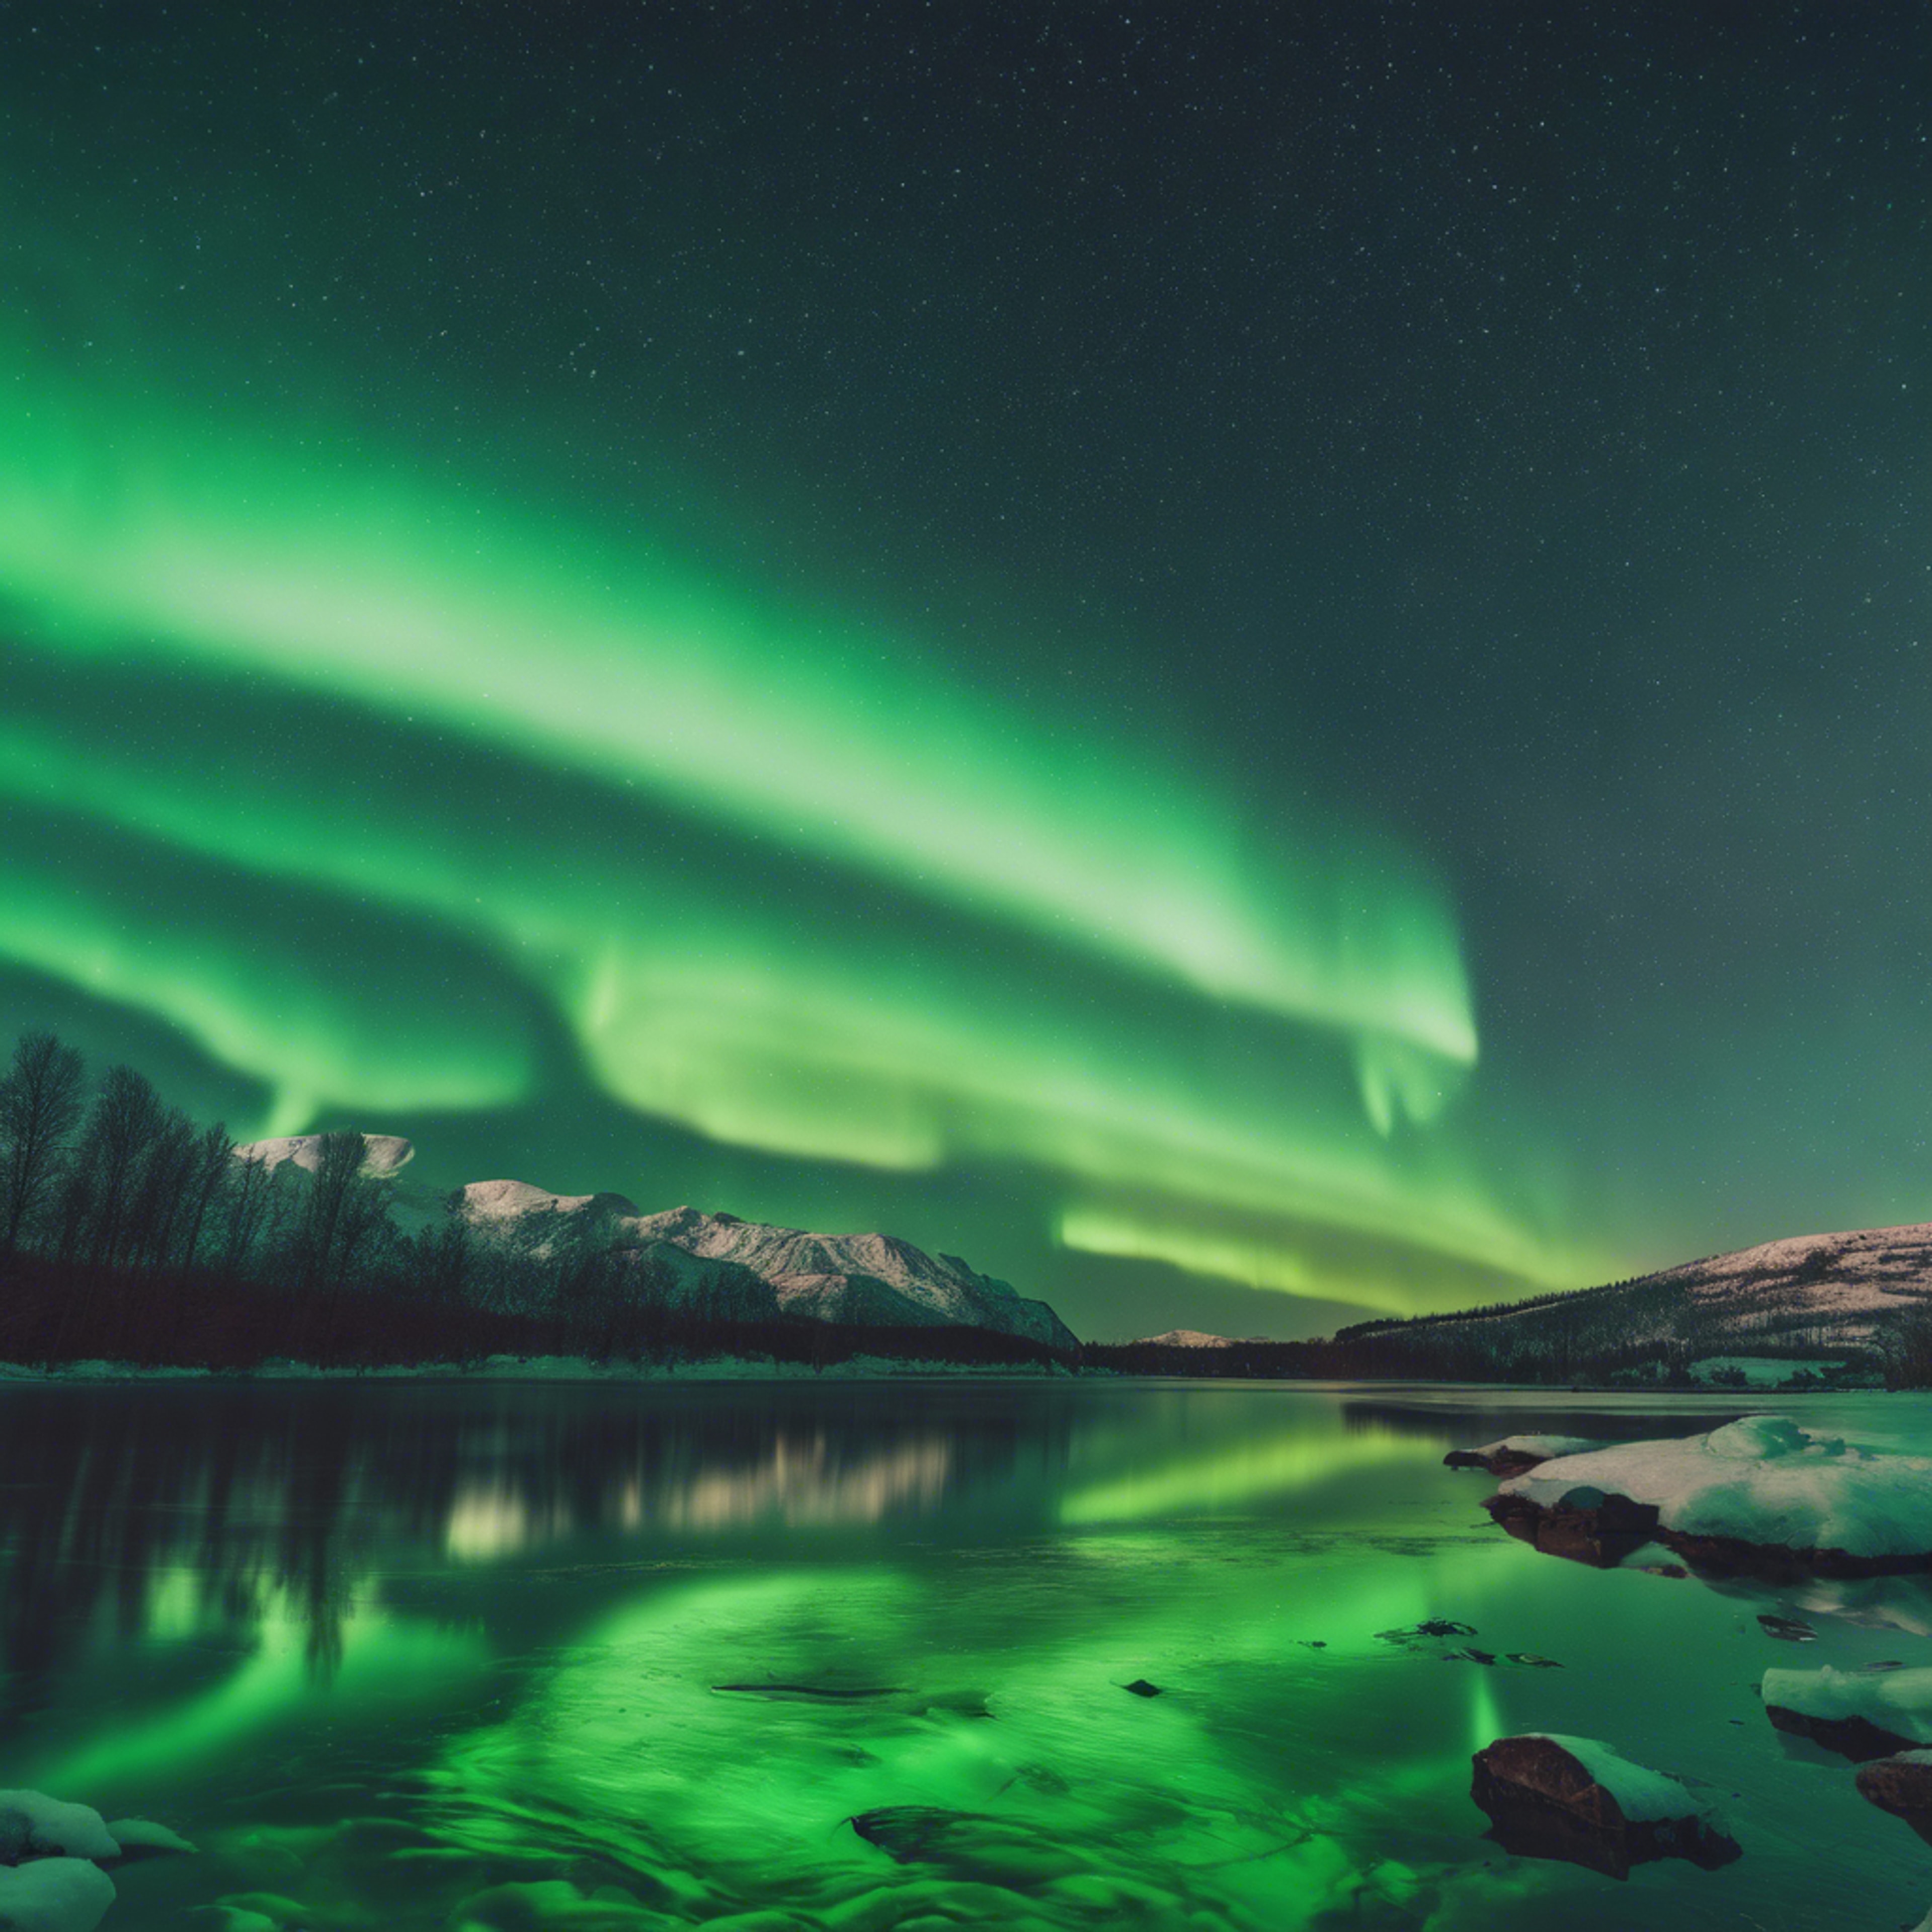 Cool green aurora borealis in the night sky. کاغذ دیواری[6739bc2aef4a46929ef0]